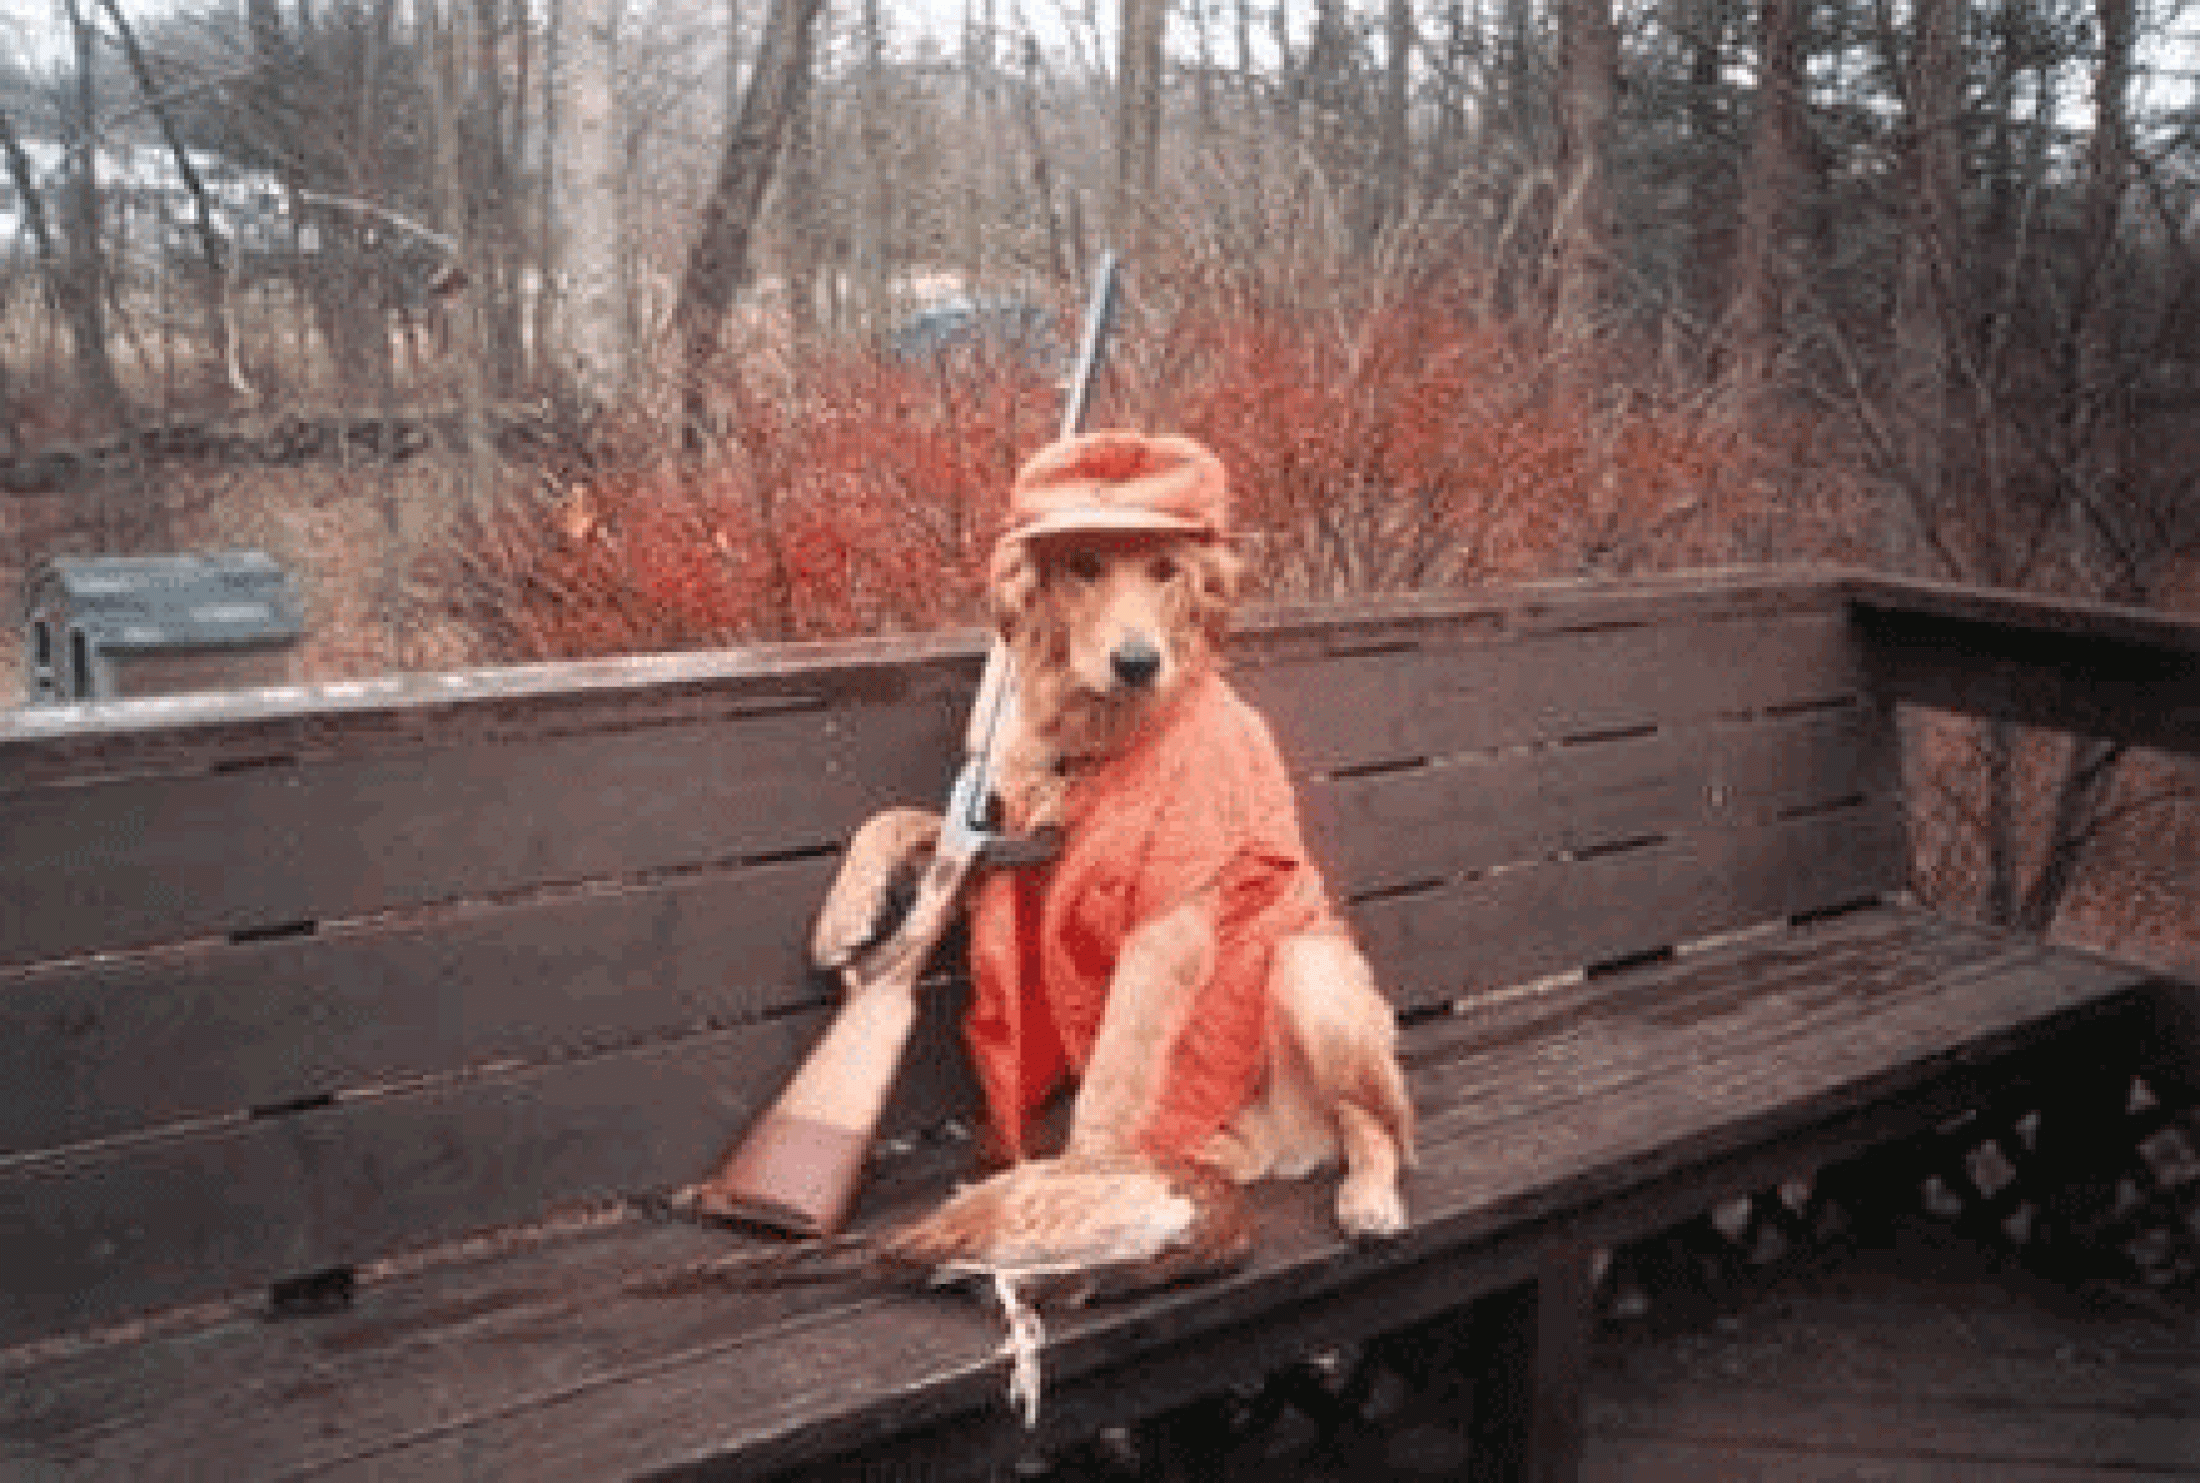 Funny Hunting Dog With Gun